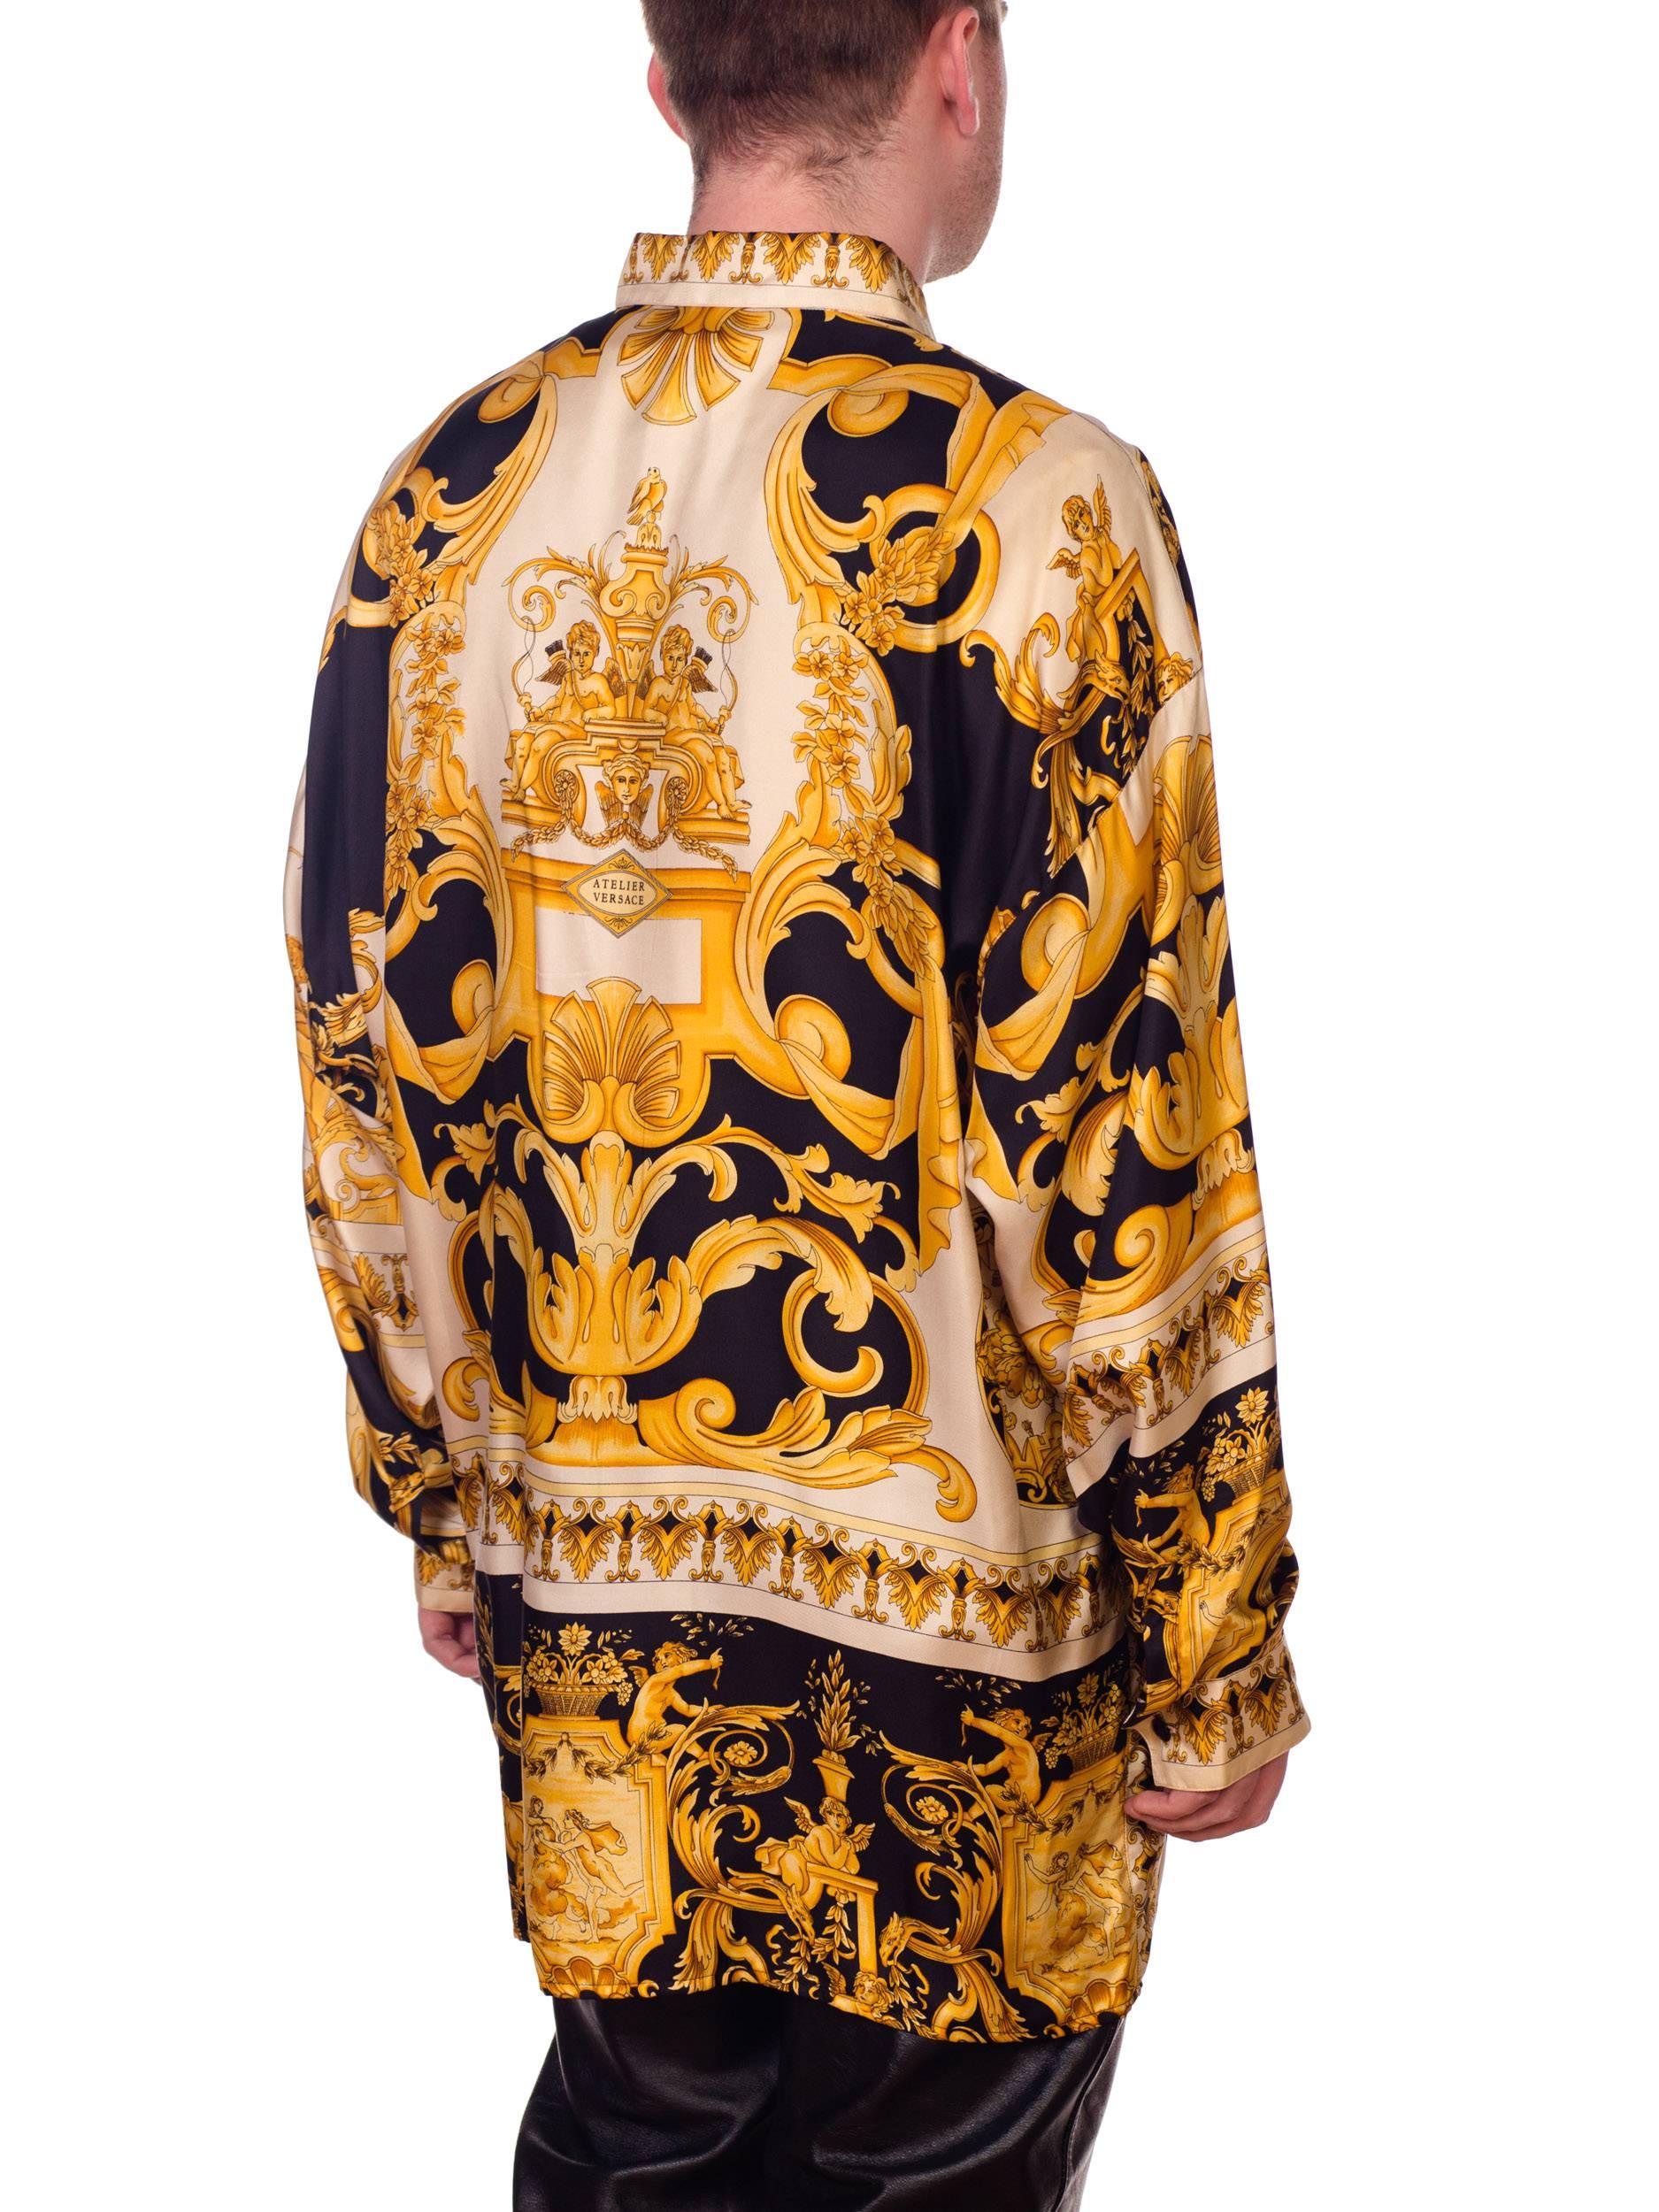 Atelier Gianni Versace Silk Gold Filigree Shirt, 1990s  3